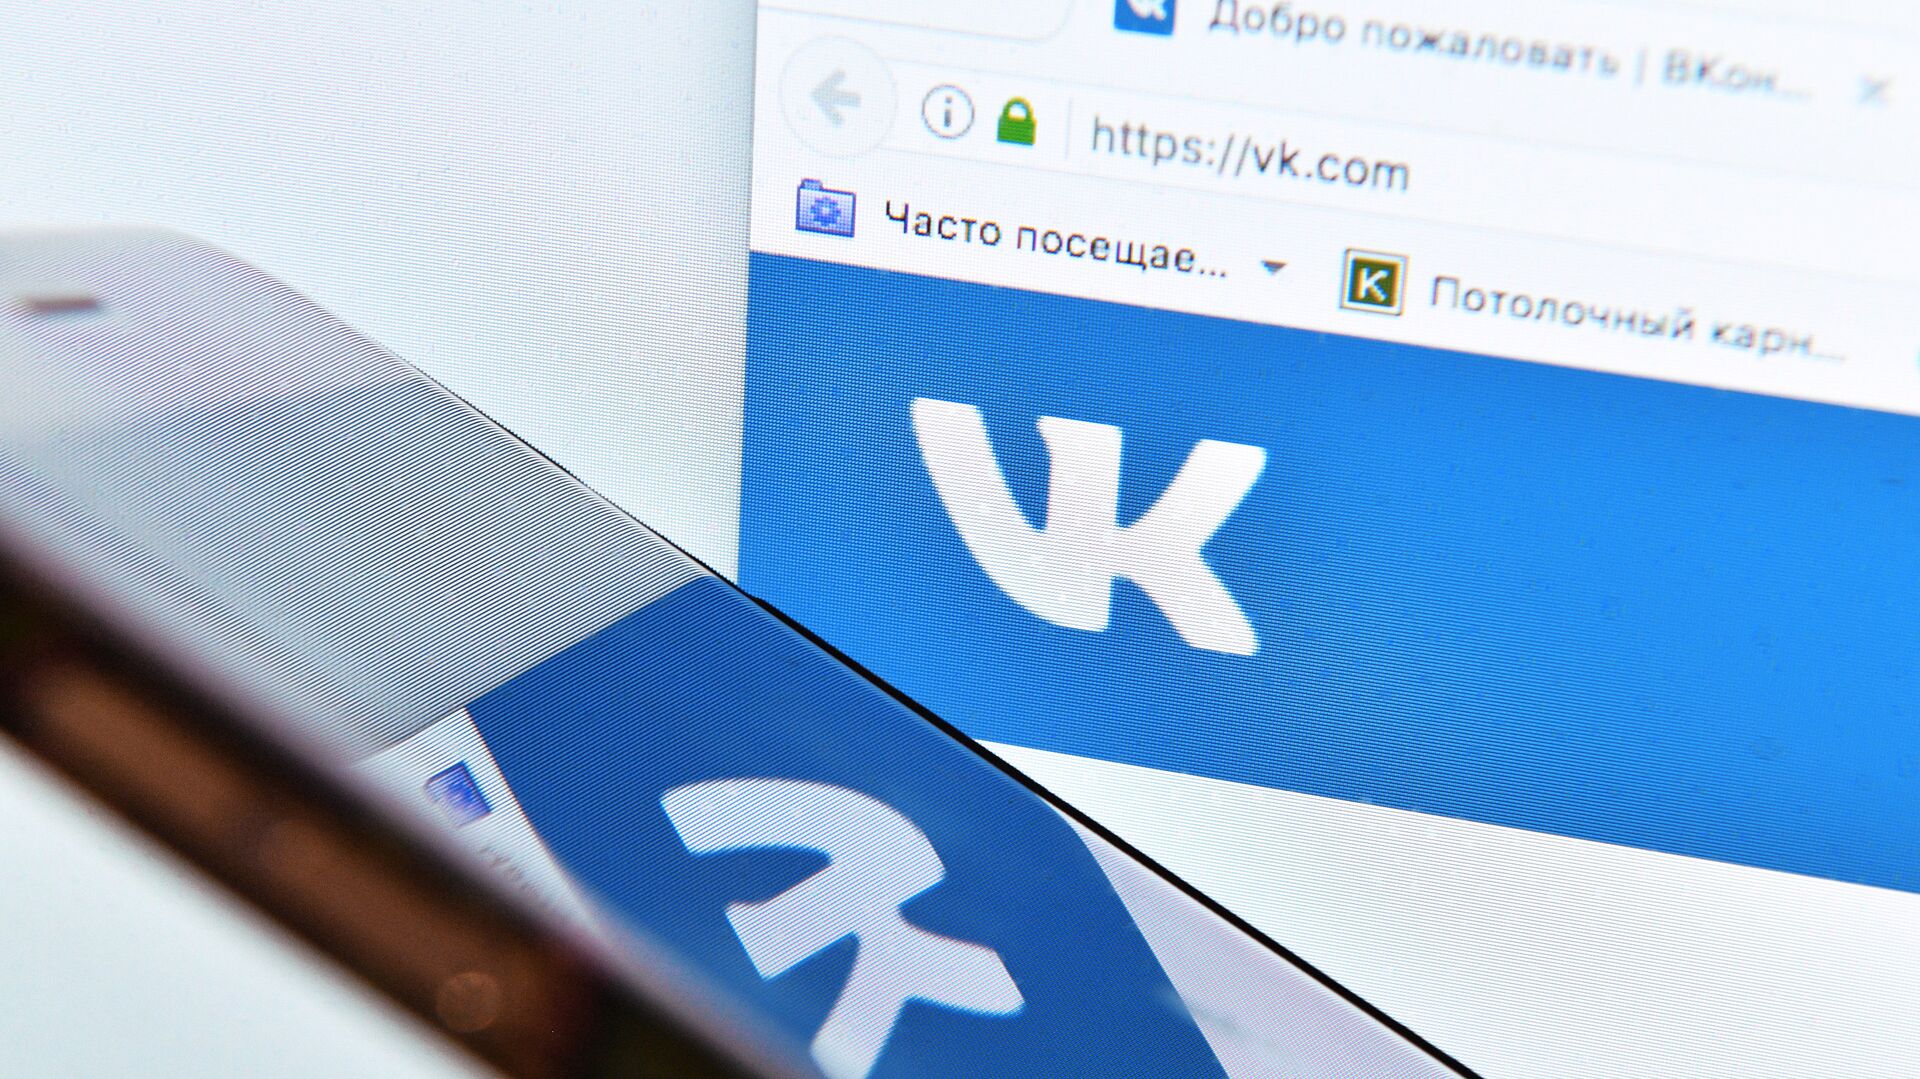 Vkontakte social media page as seen on a computer screen - Sputnik International, 1920, 20.03.2022